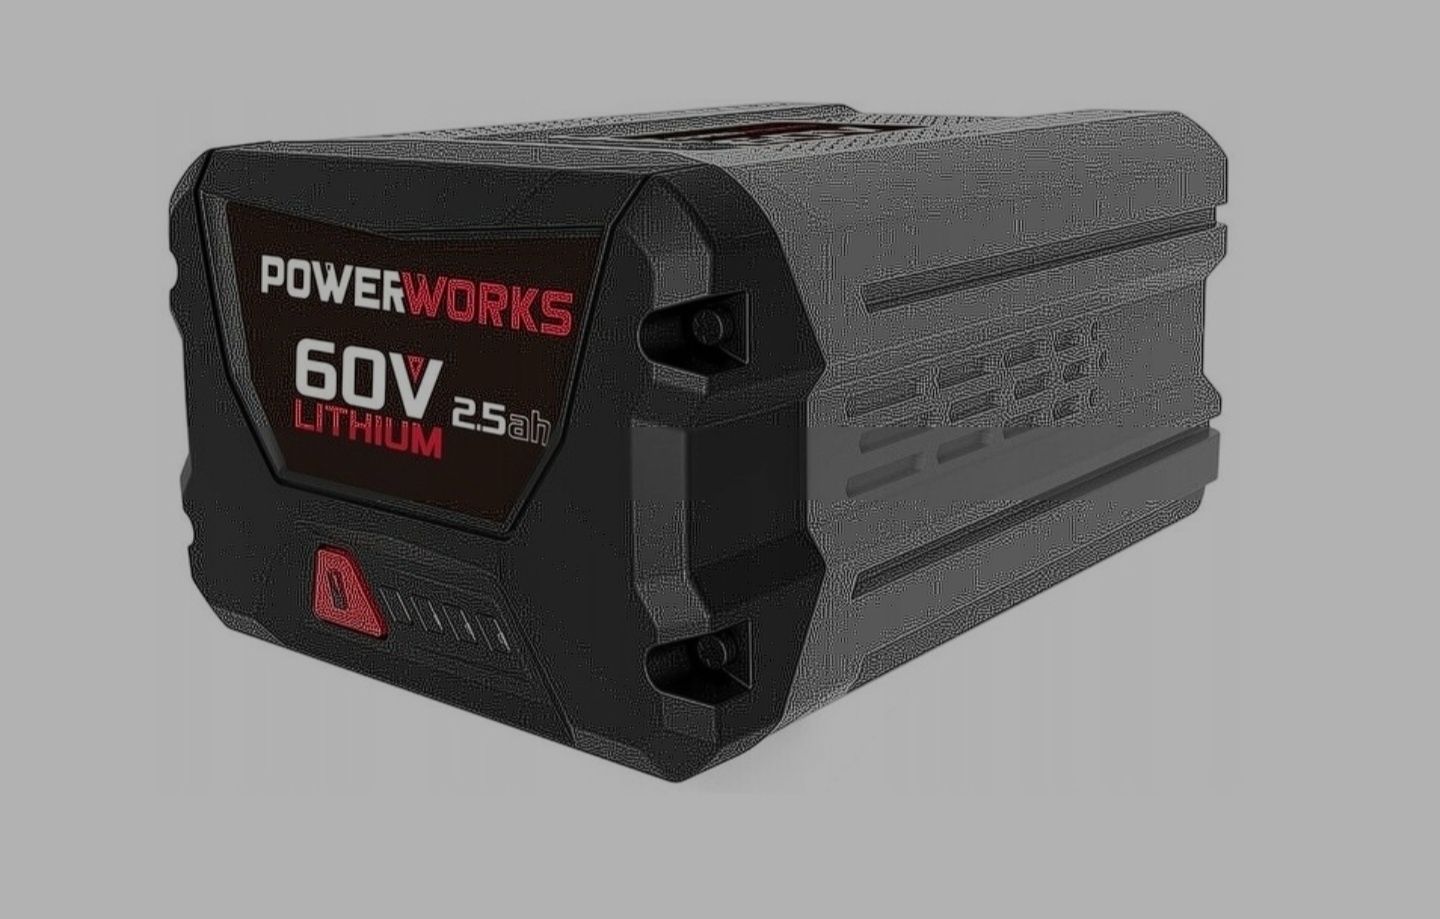 Podkaszarka akumulatorowa kosa POWERWORKS 60V